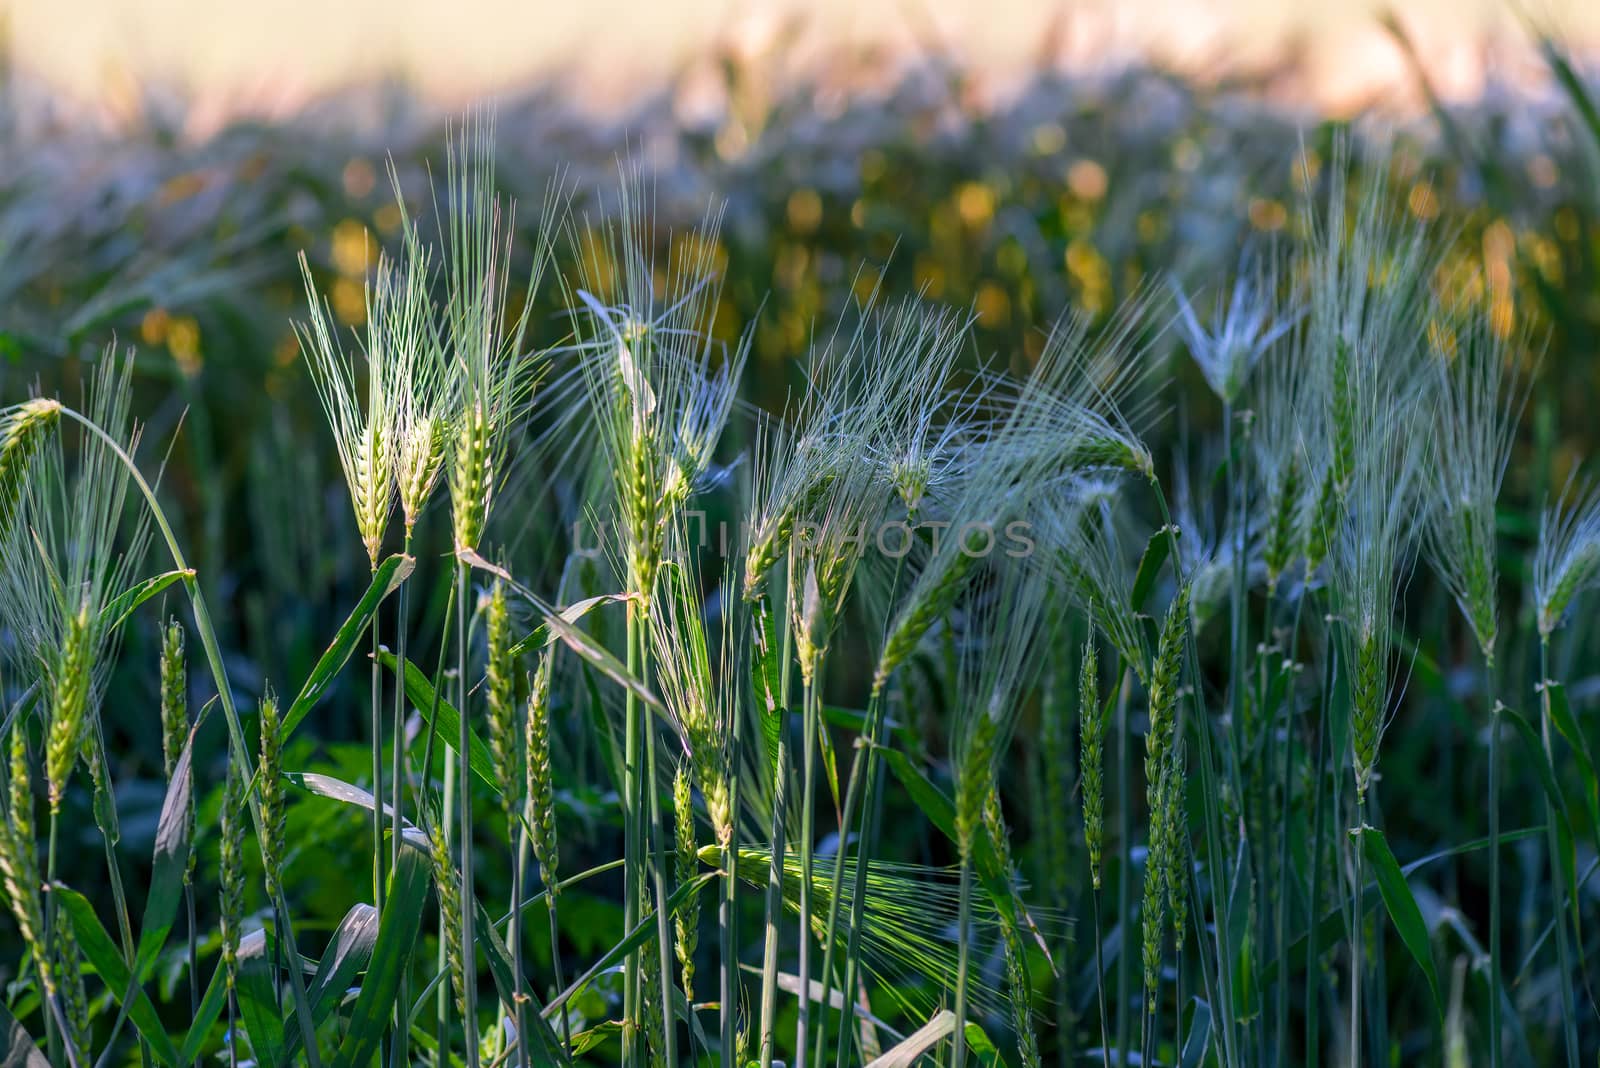 growing ears of juicy wheat in a field by kosmsos111